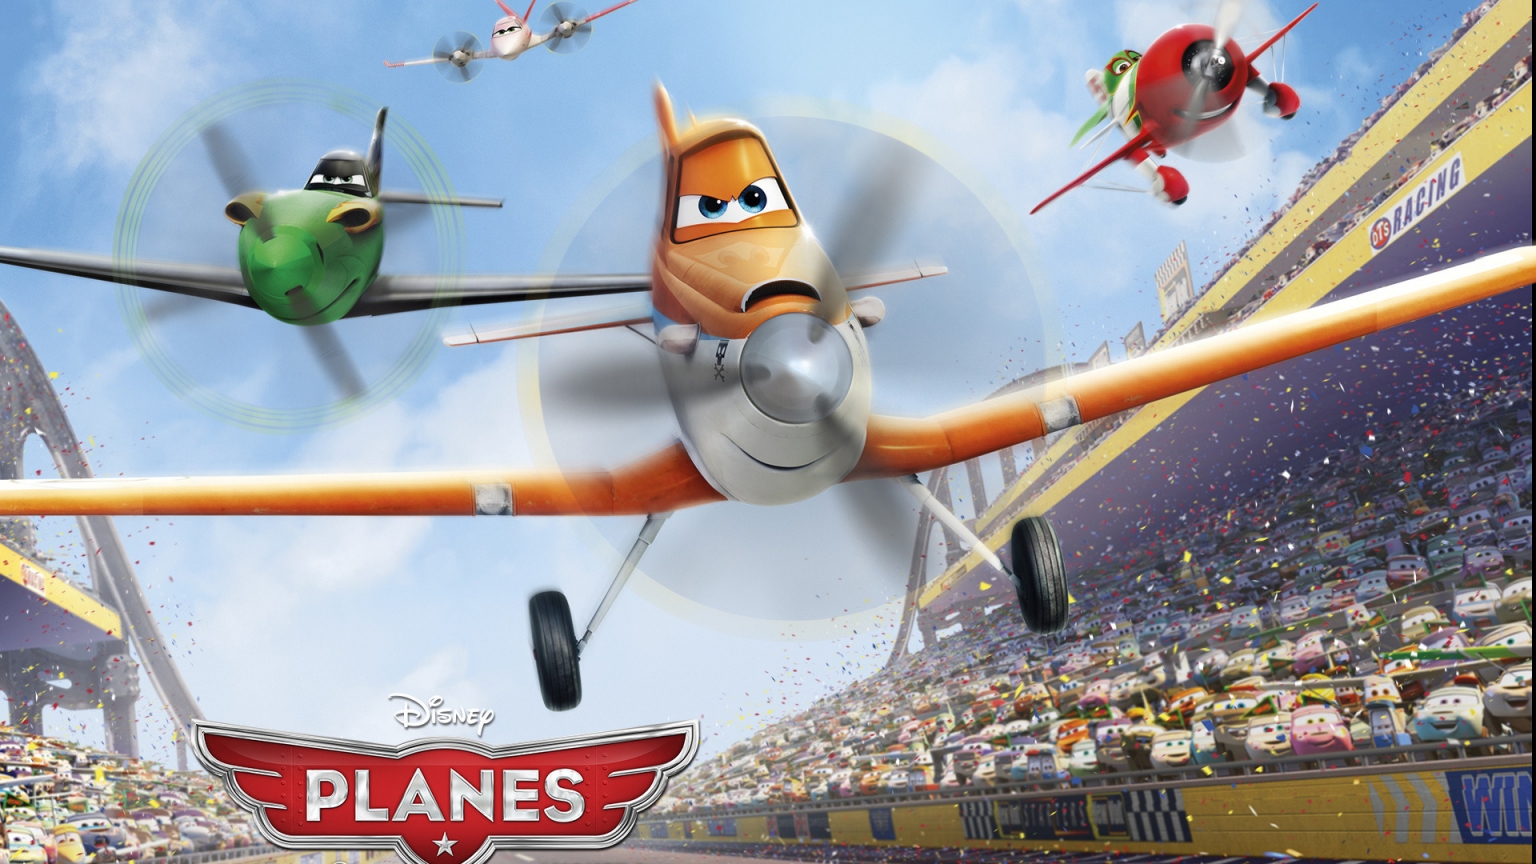 Disney Planes Movie for 1536 x 864 HDTV resolution